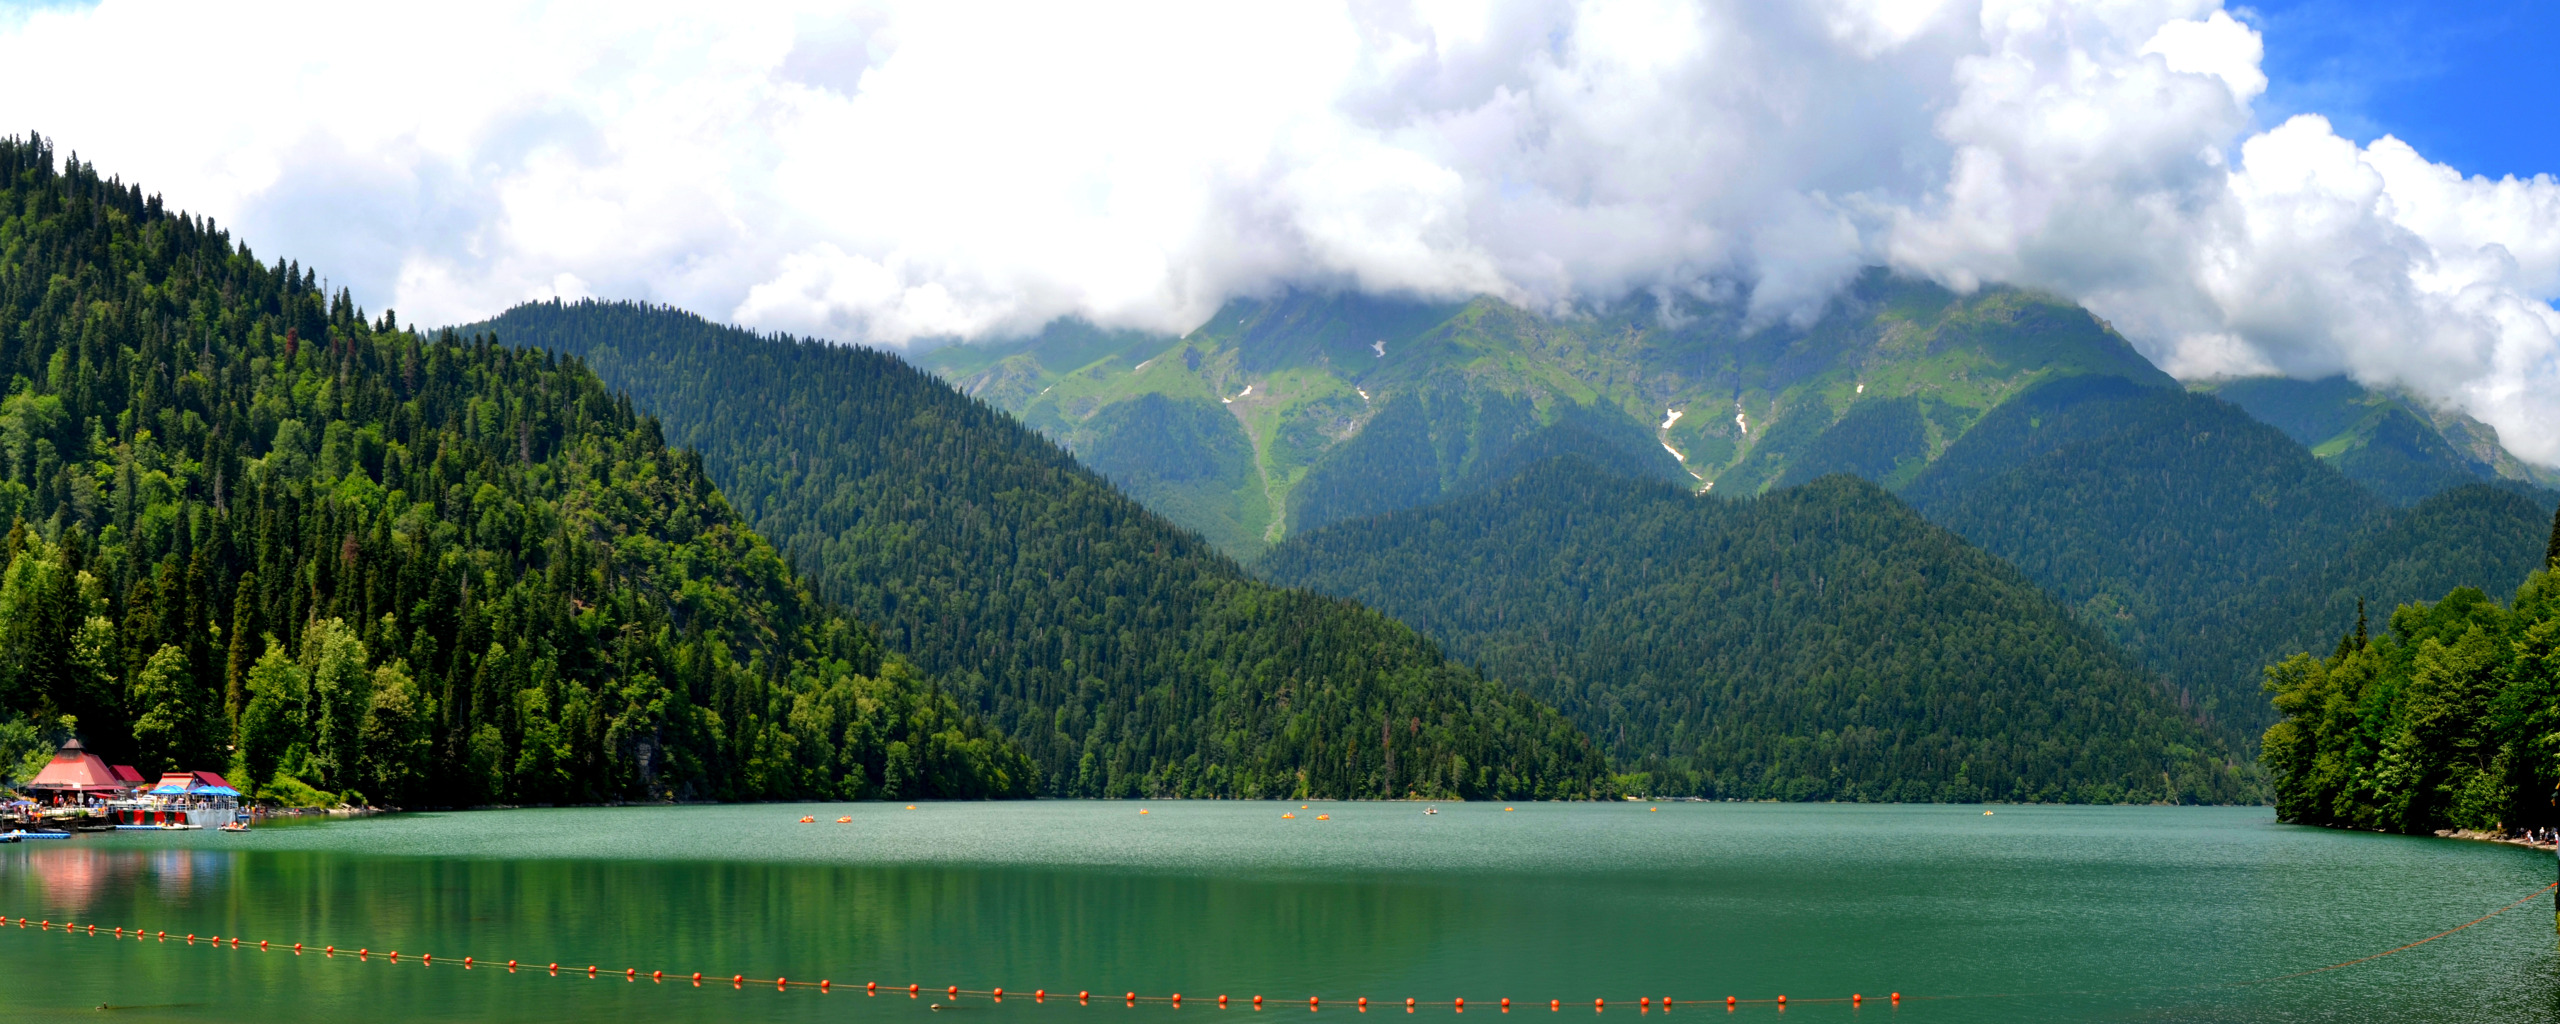 Времена года абхазия. Озеро Рица Абхазия.